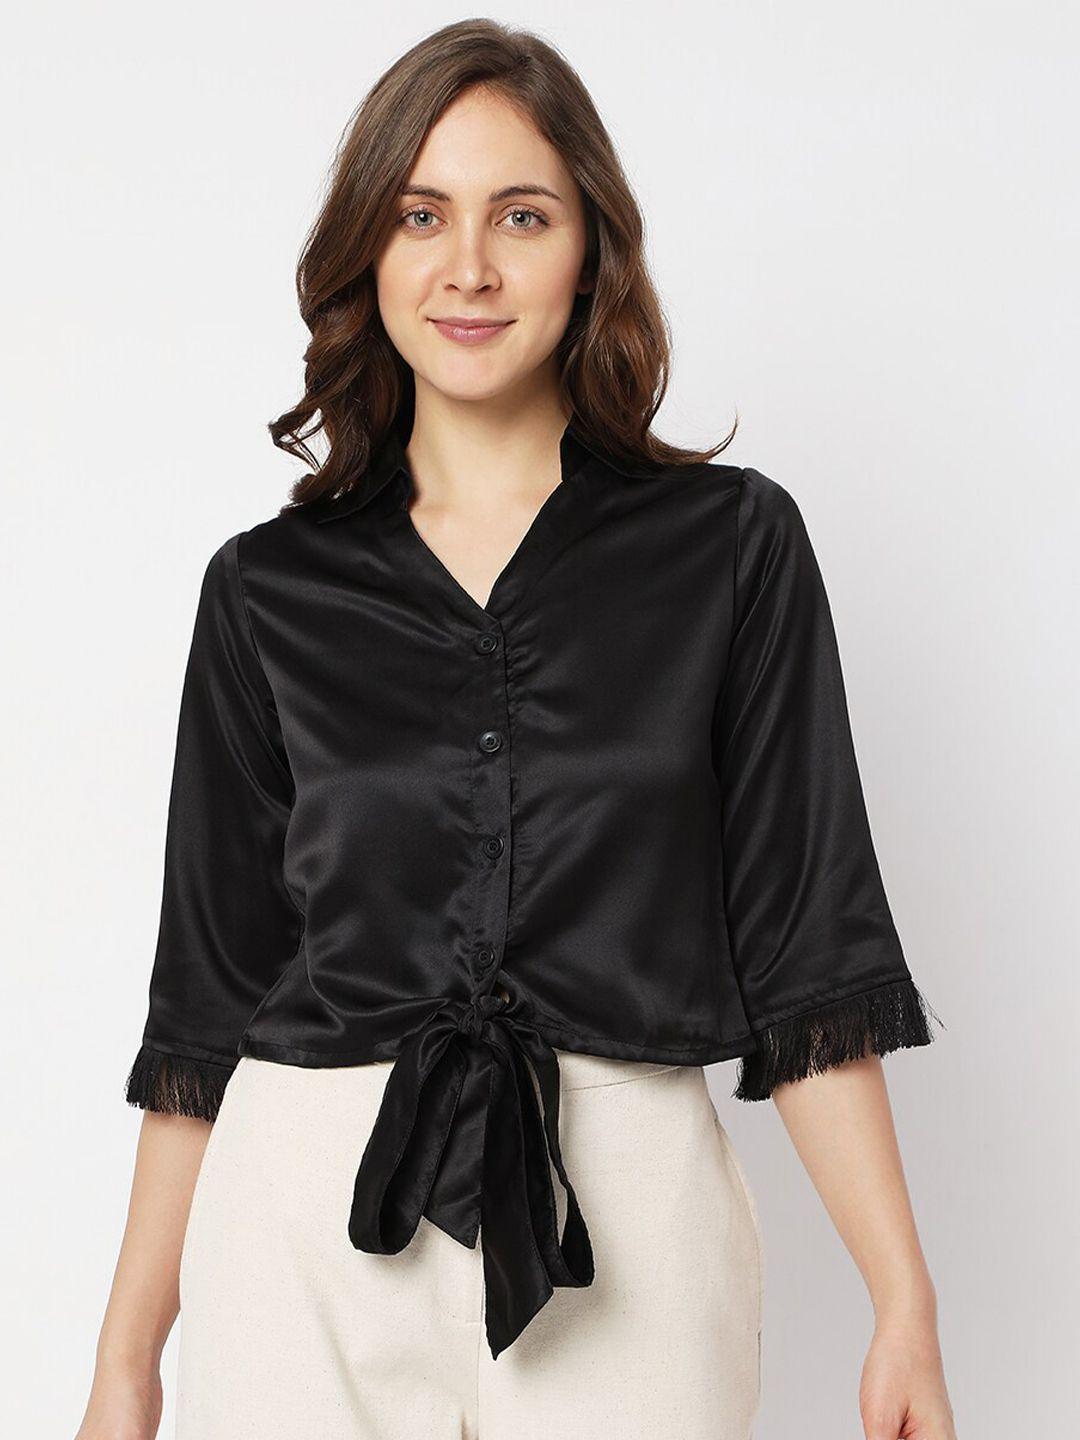 smarty pants women black solid mandarin collar comfort party shirt